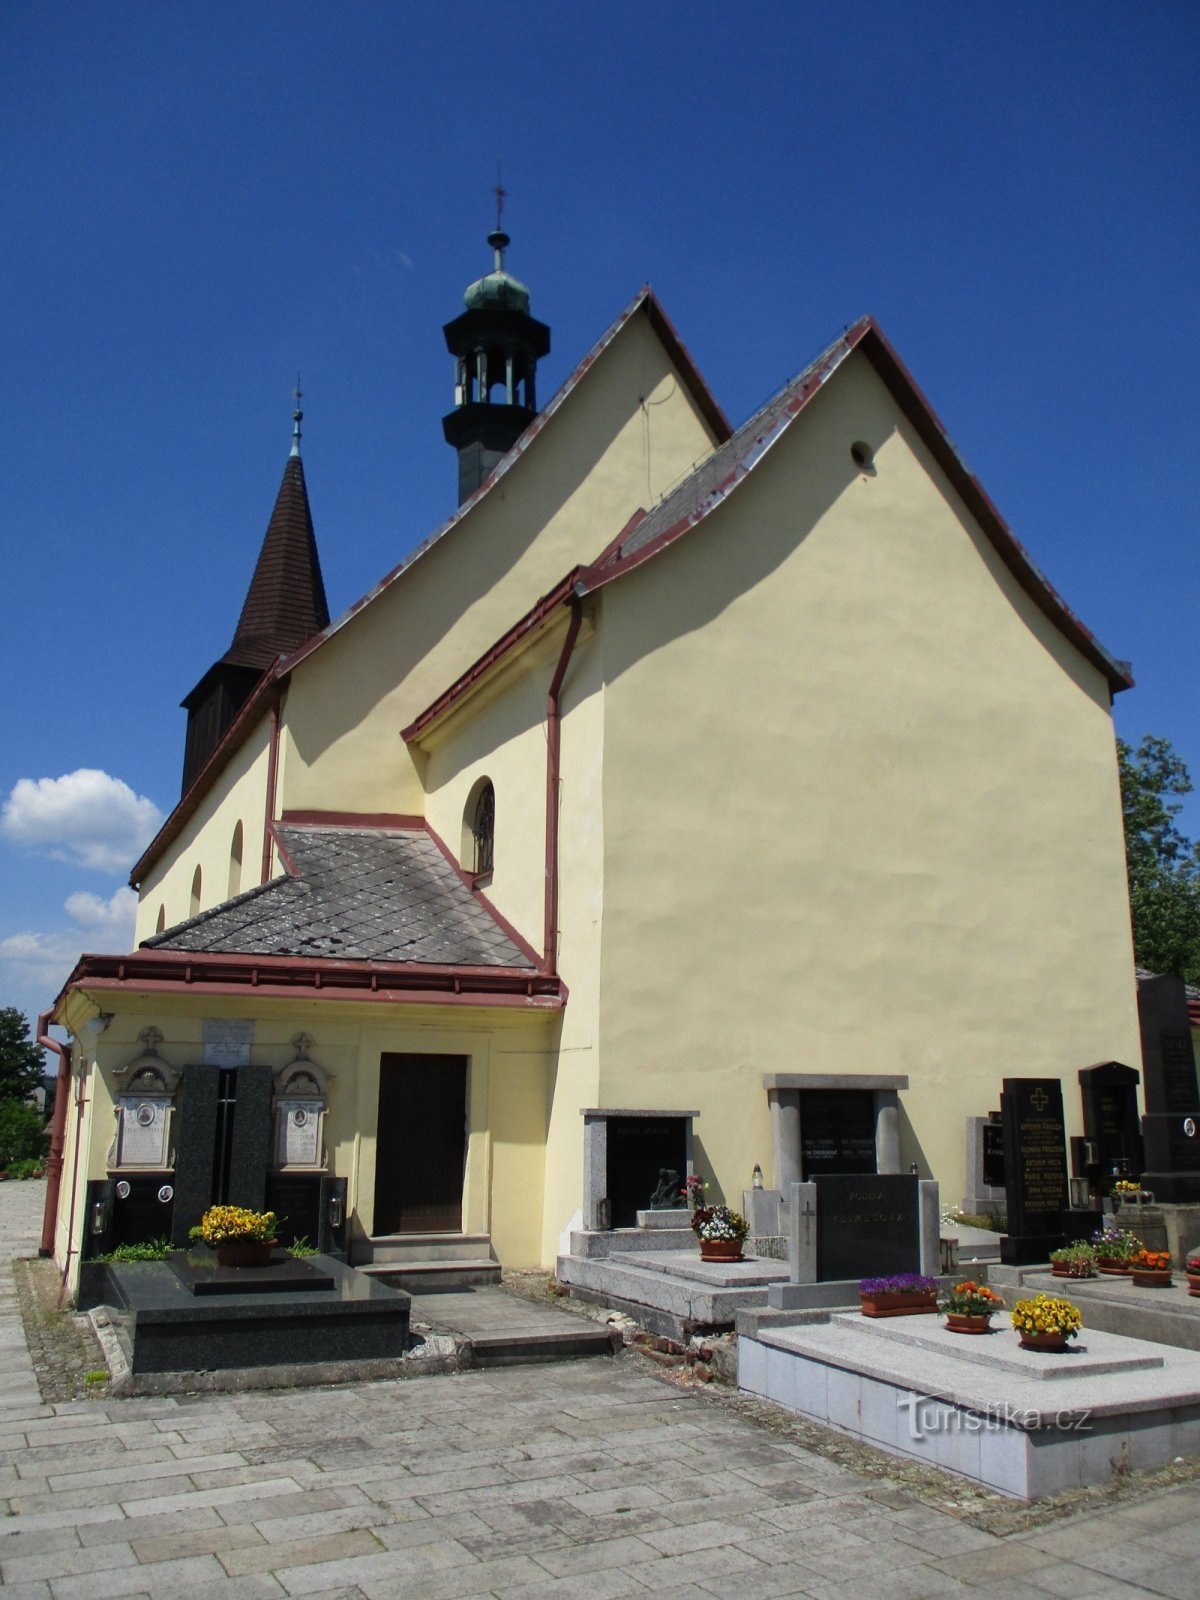 Cerkev sv. Janeza Krstnika (Rtyne v Podkrkonoší, 5.6.2019. julij XNUMX)